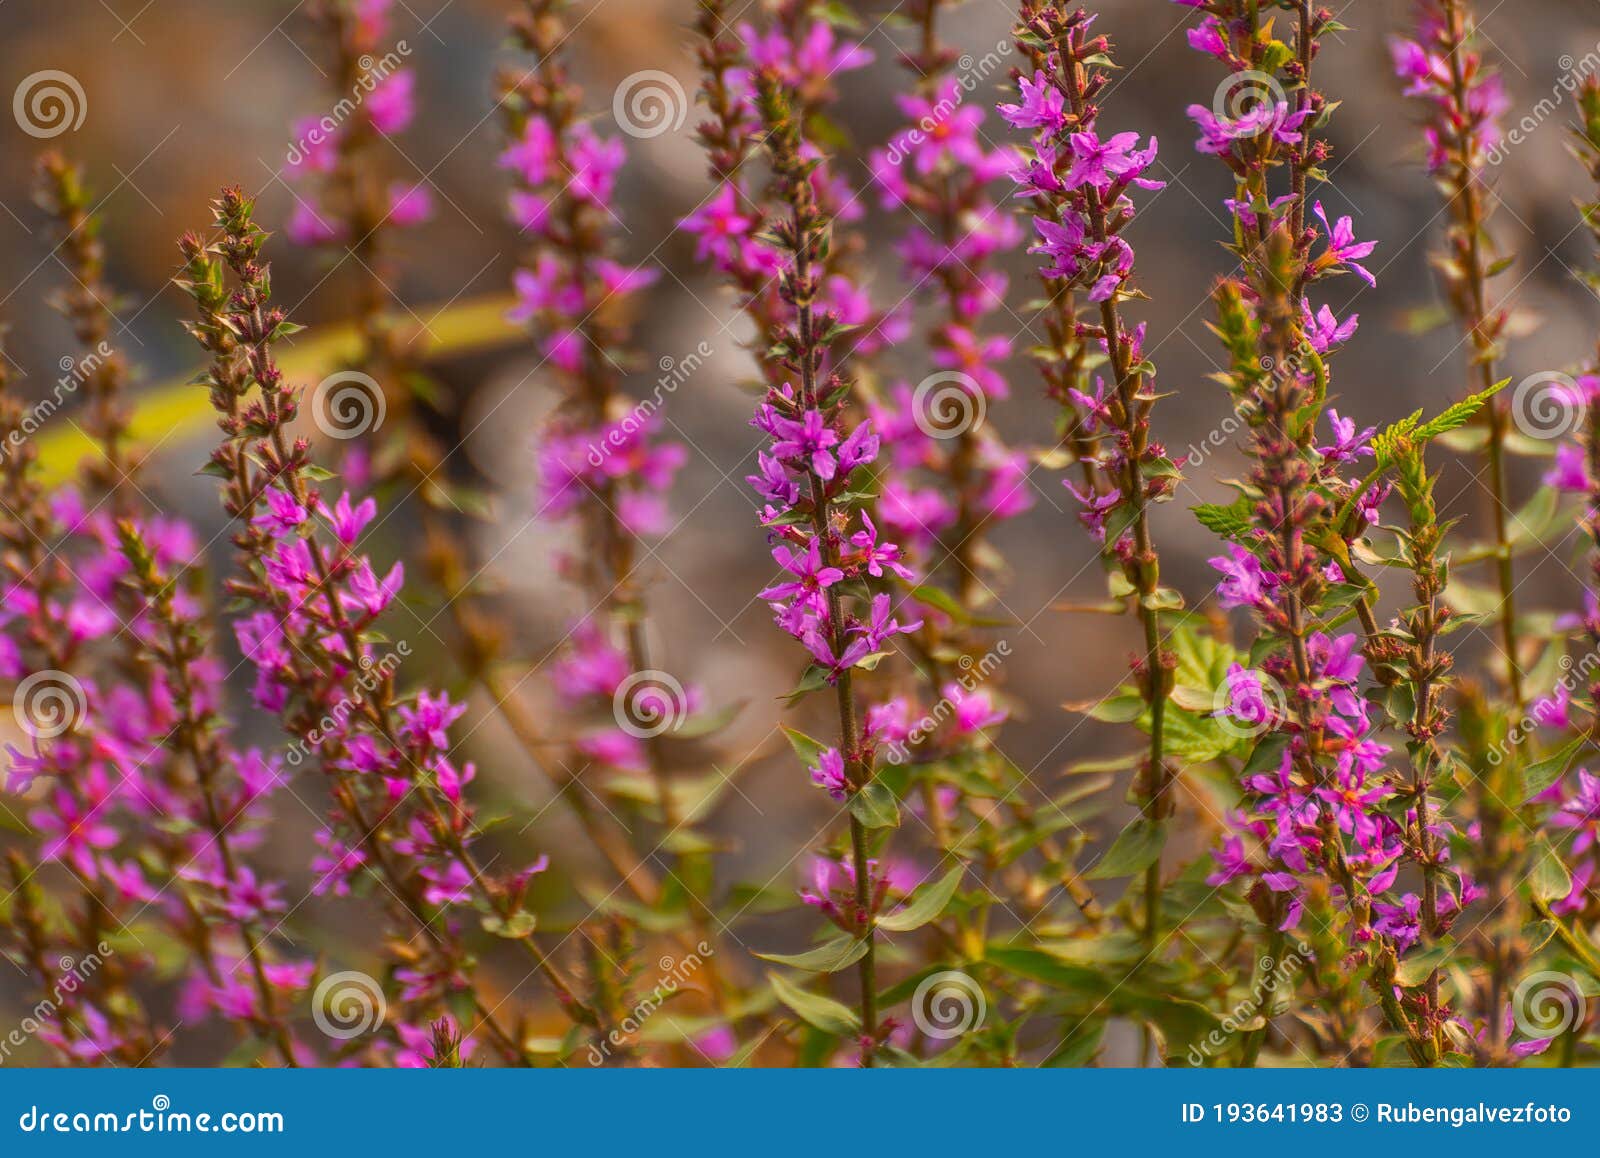 wild lavender flowers shot outdoors